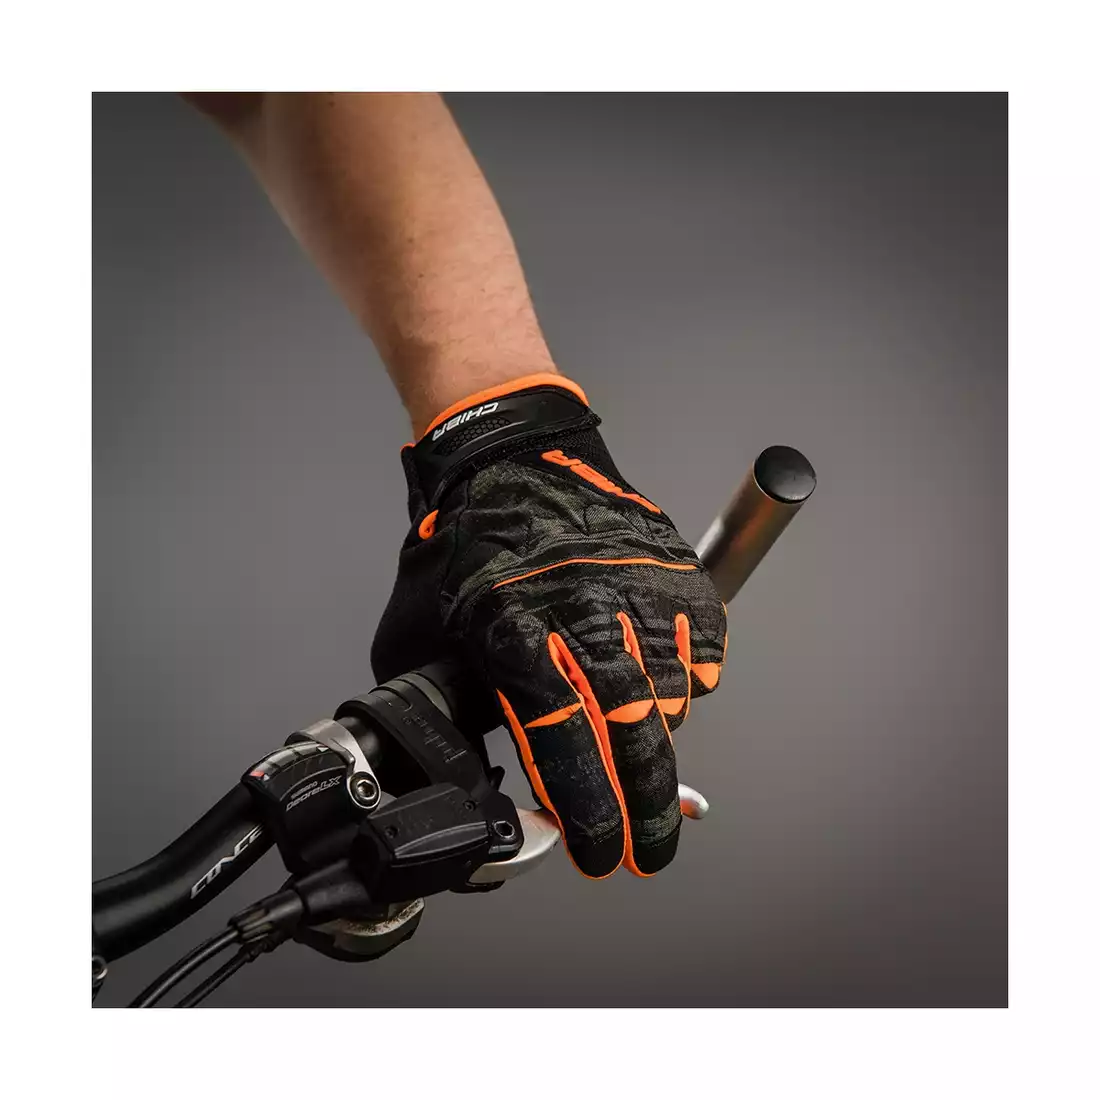 CHIBA MAVERICK Cycling gloves, black and orange